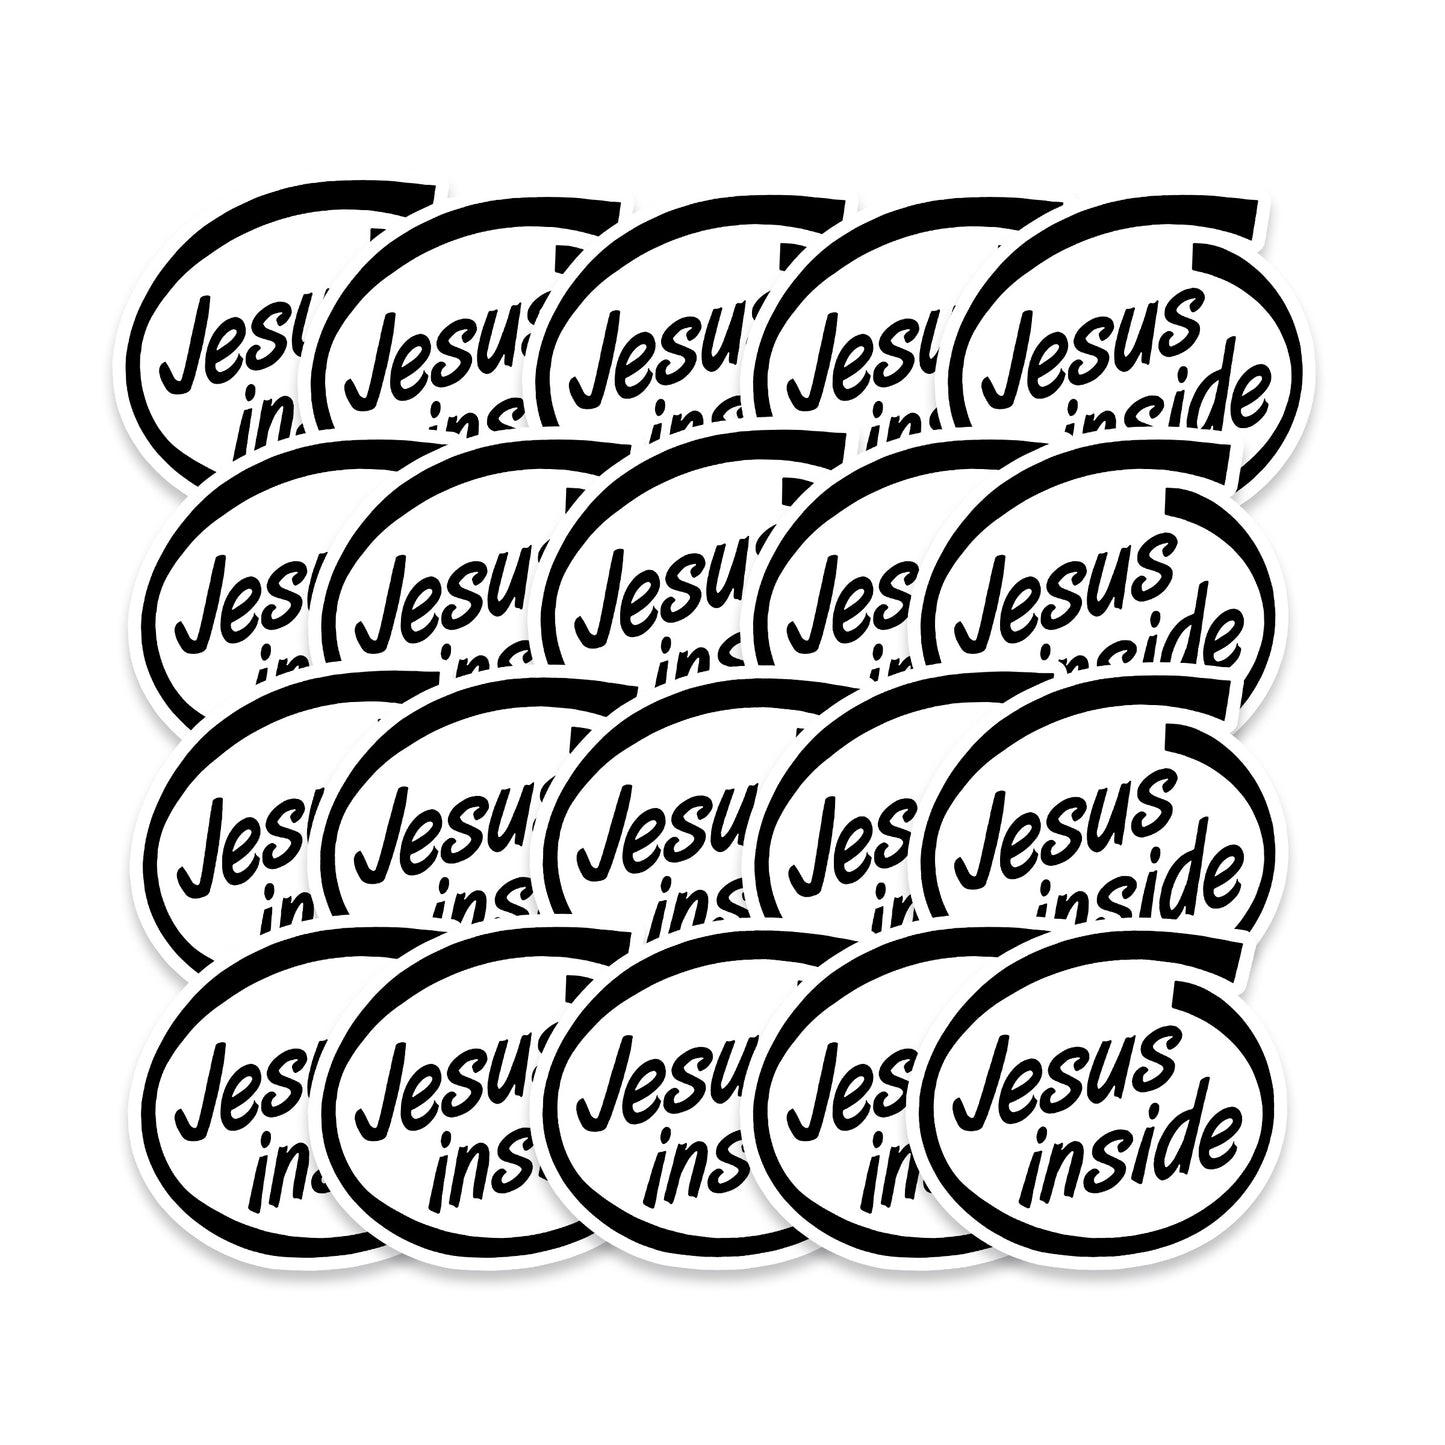 Jesus Inside Vinyl Sticker